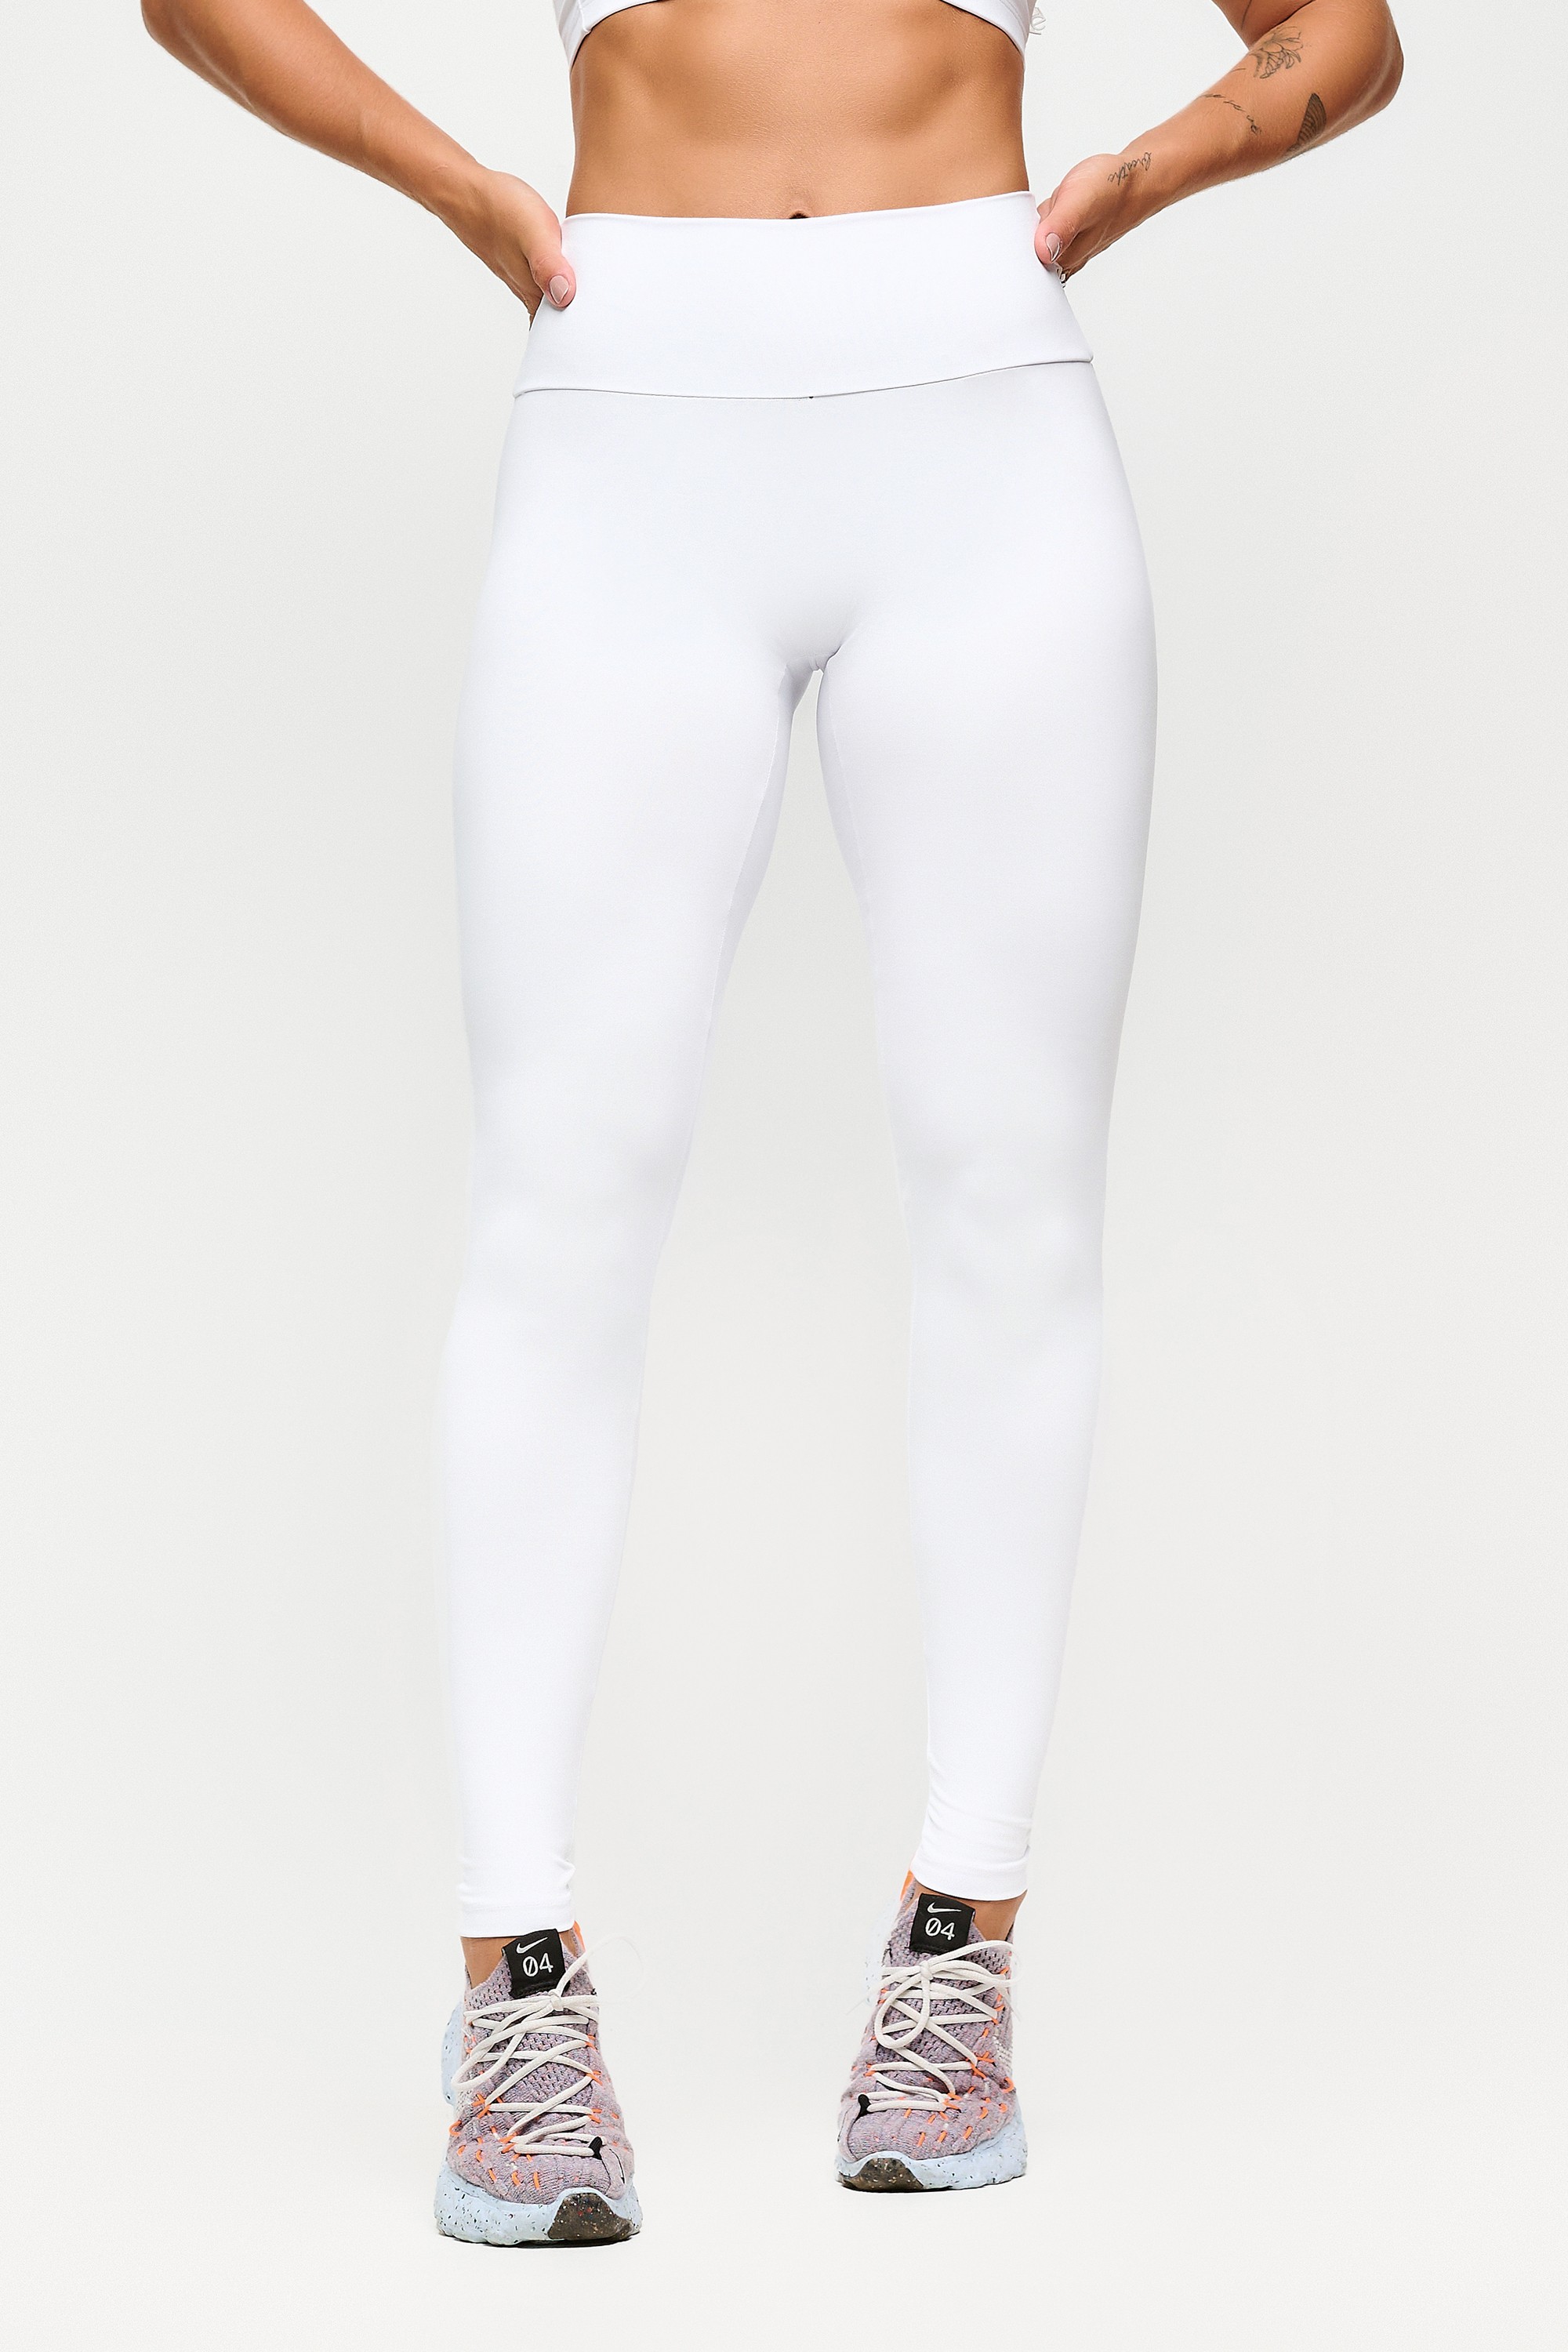 Calça legging branca support - Lett Sports